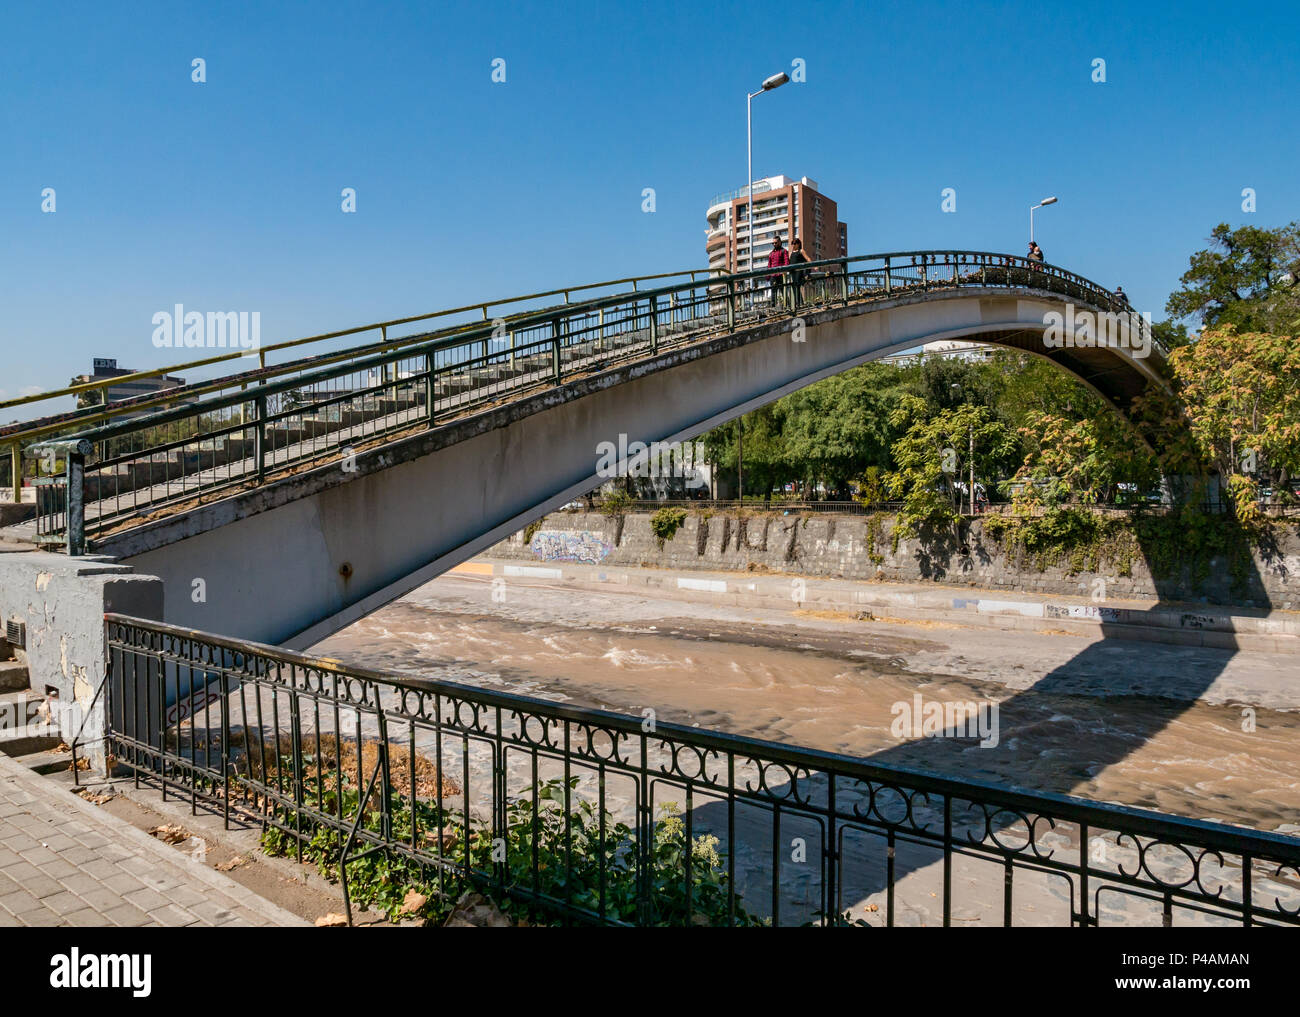 Fußgänger-Brücke über den Fluss Mapocho, Racamalac Brücke, Santiago, Chile, mit niedrigem Wasser Stockfoto